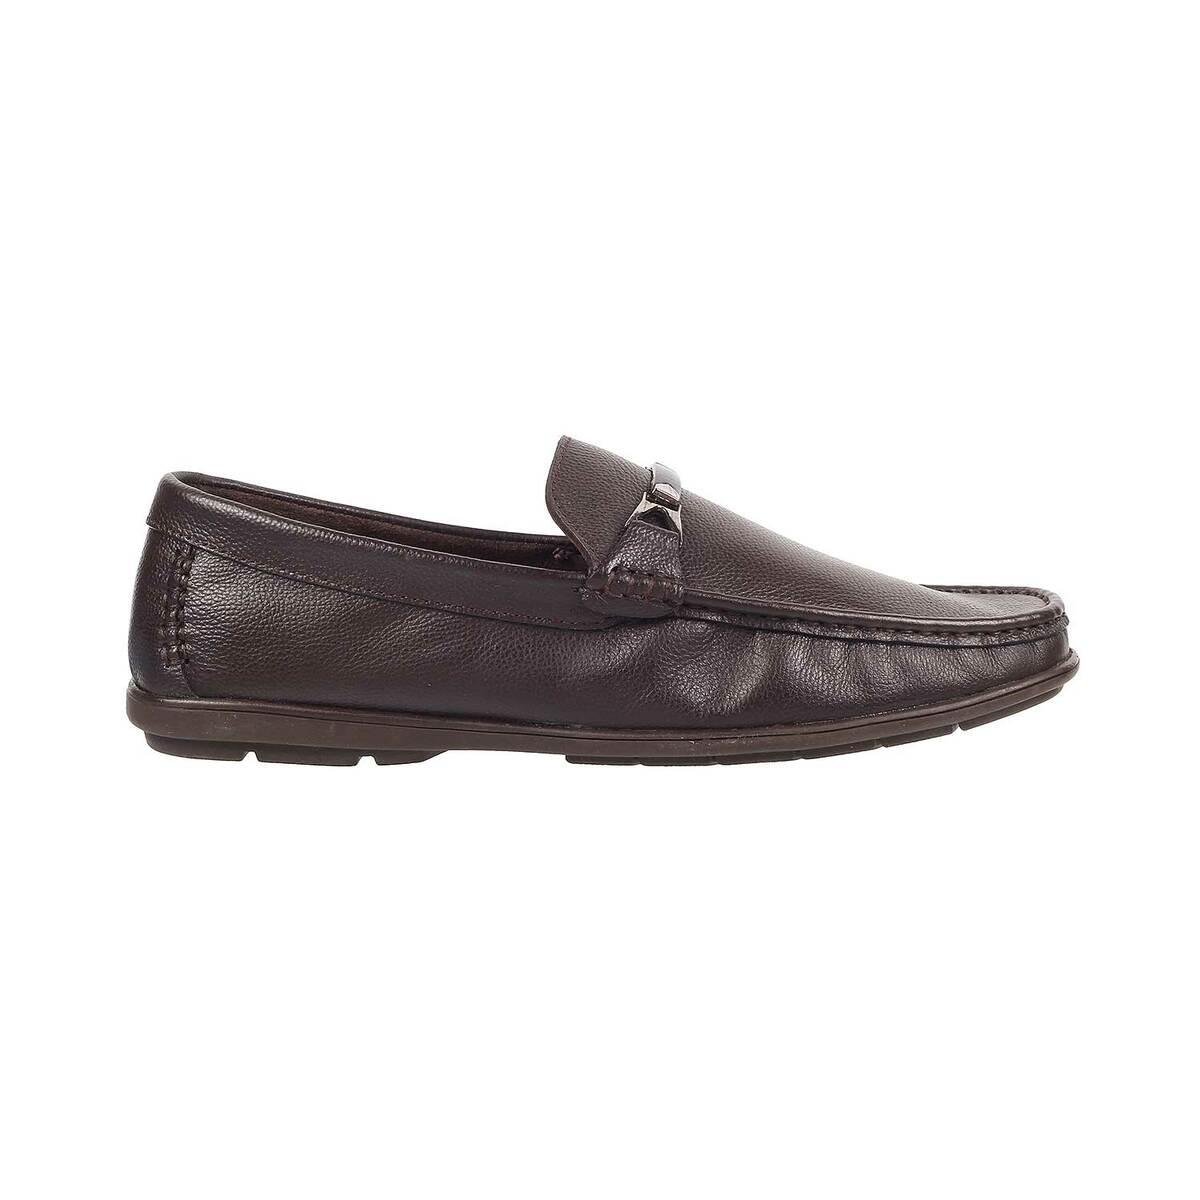 Buy LOTUS BAWA Men's Formal Black Genuine Leather Shoe LB 12 9 at Amazon.in